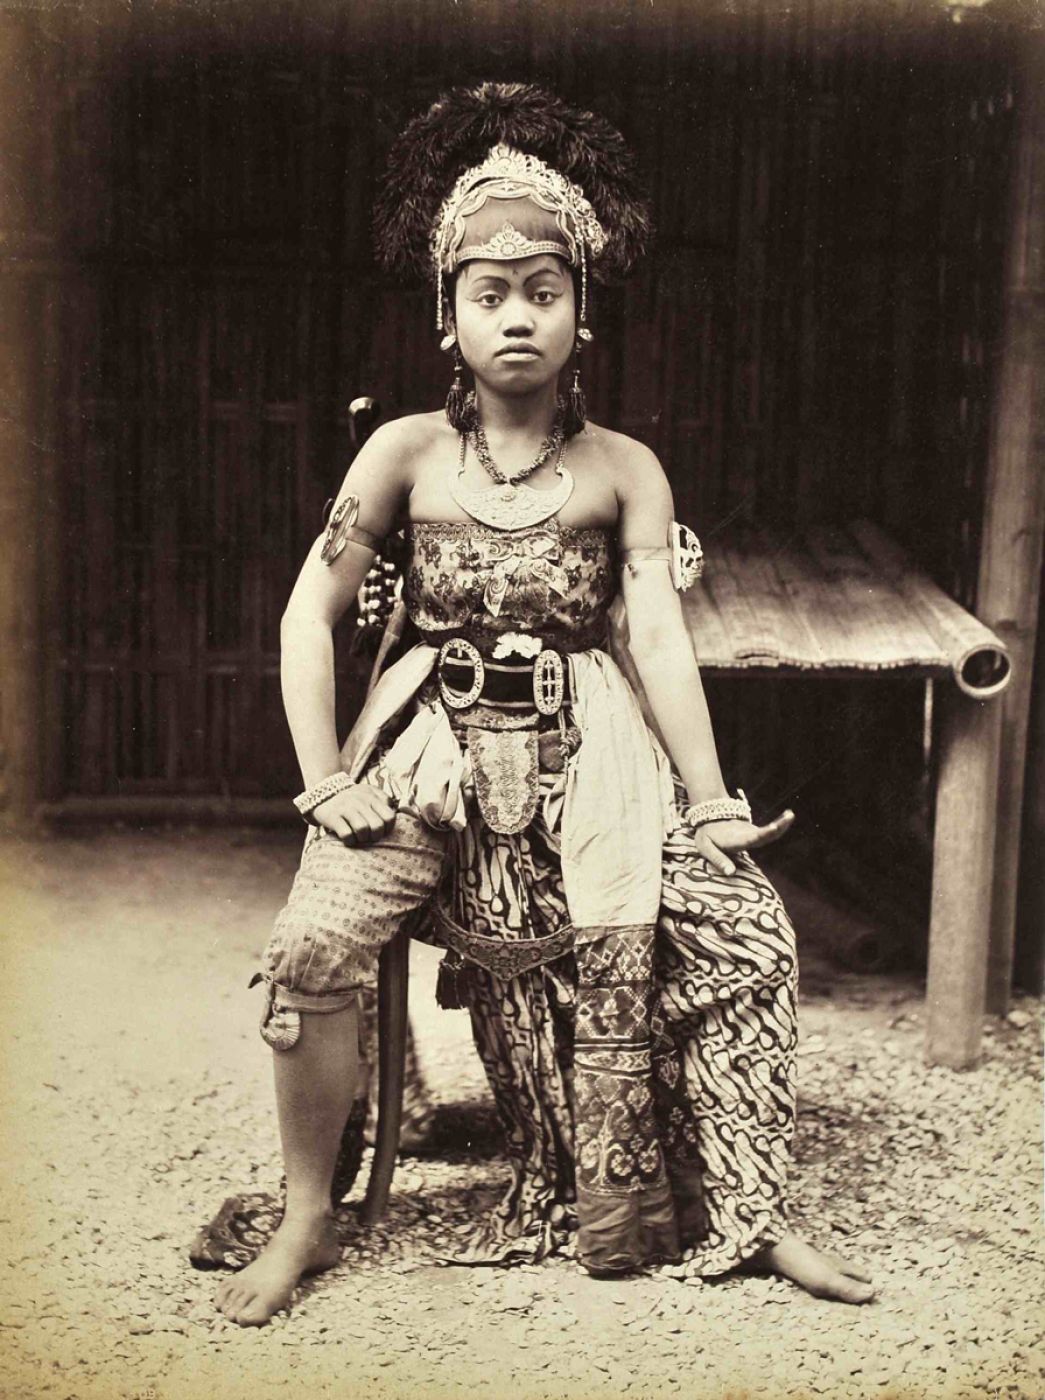 Neurdein Frères, “Danseuse Javanaise”, 1889